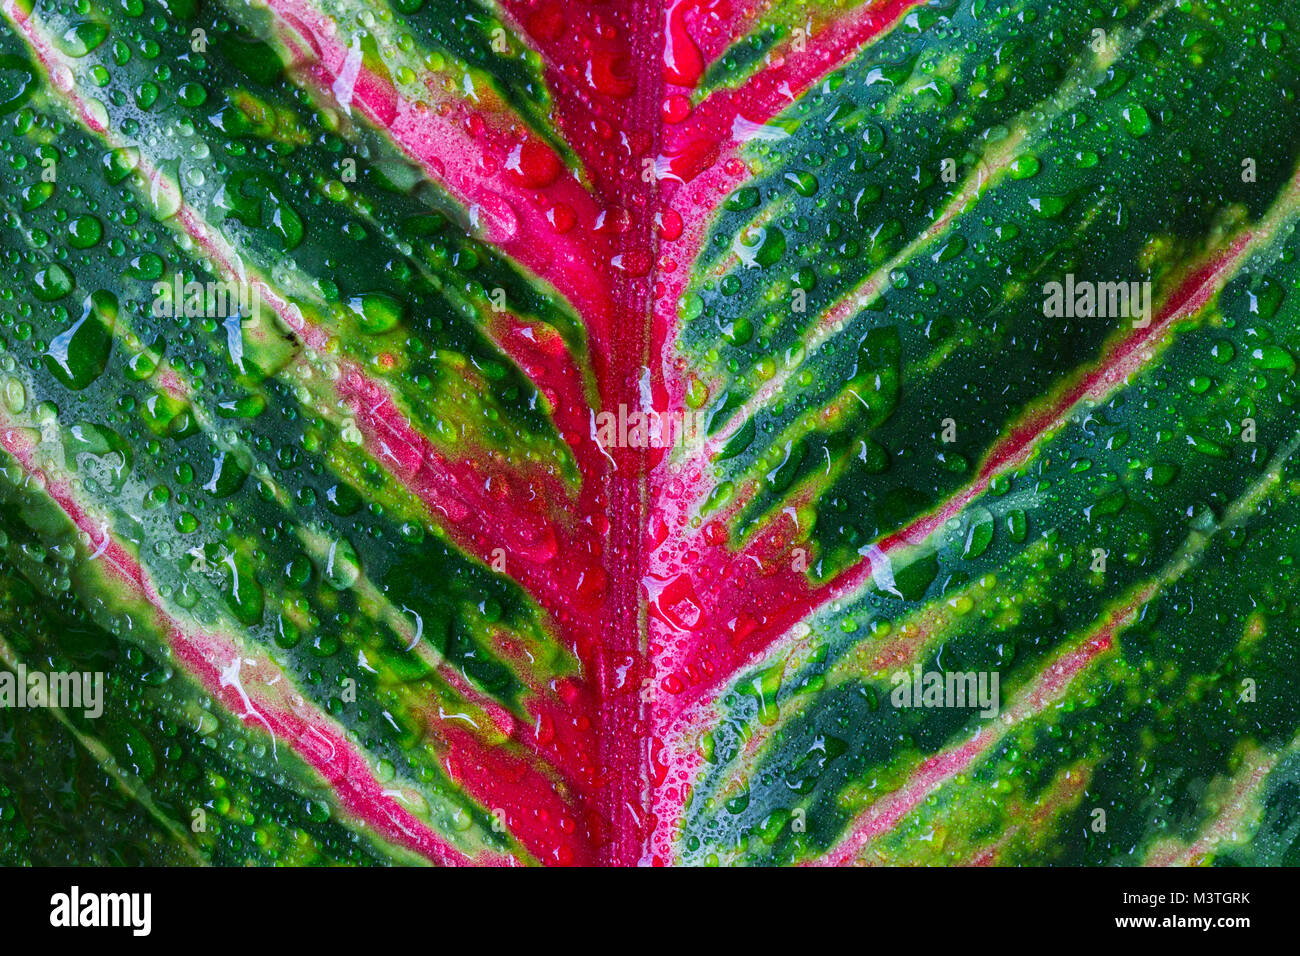 Aglaonema, Green leaf tree plant fresh nature, garden decoration Stock Photo